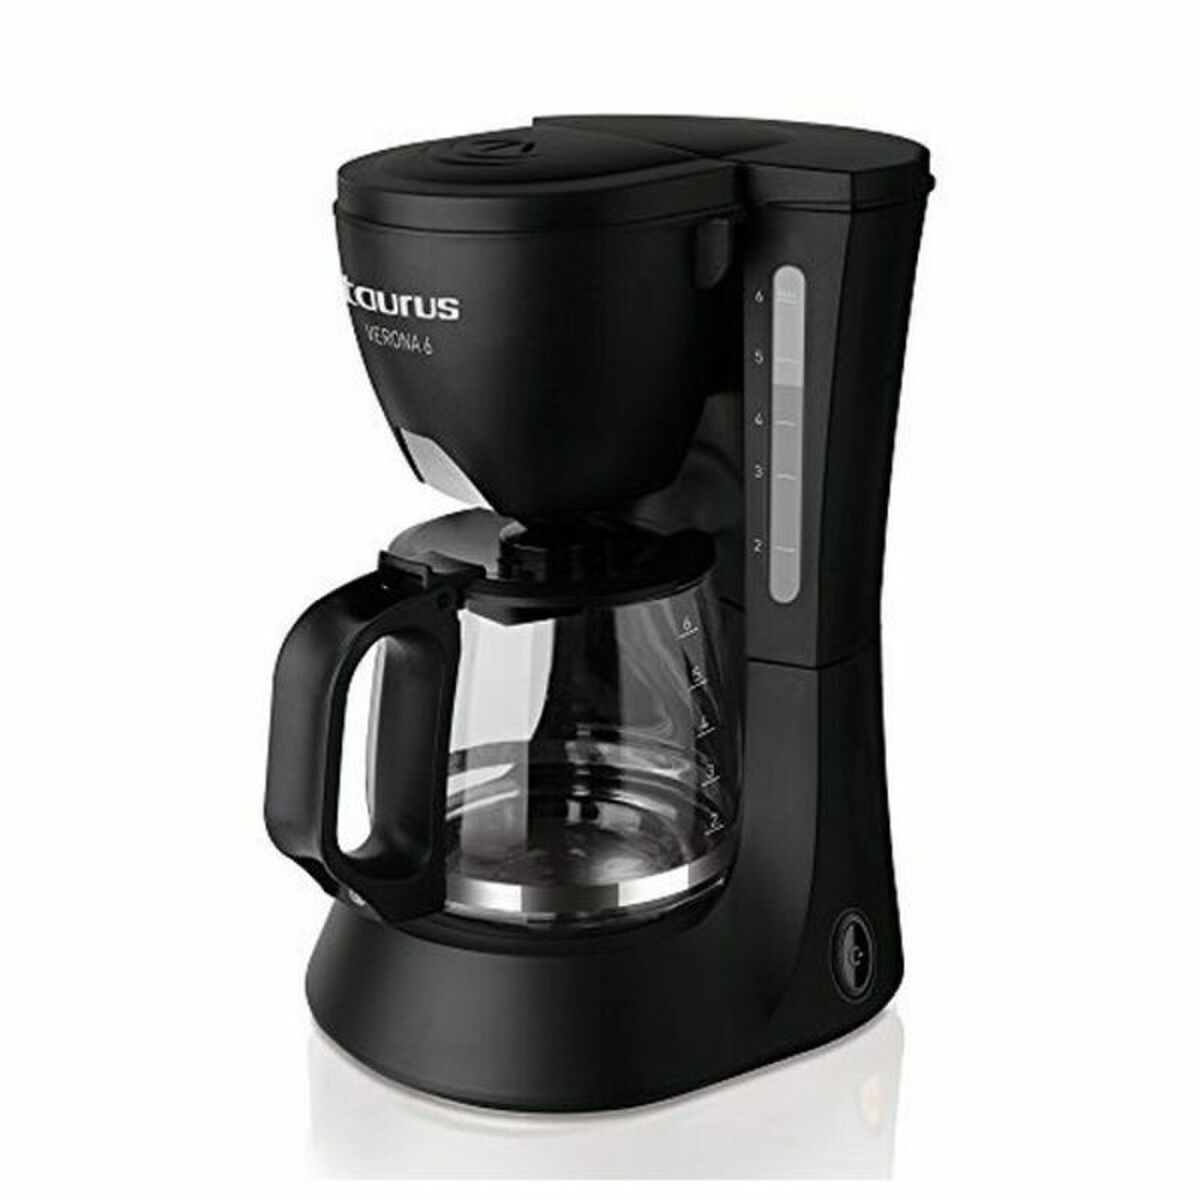 Filterkaffeemaschine Taurus VERONA 6 NEW - CA International  